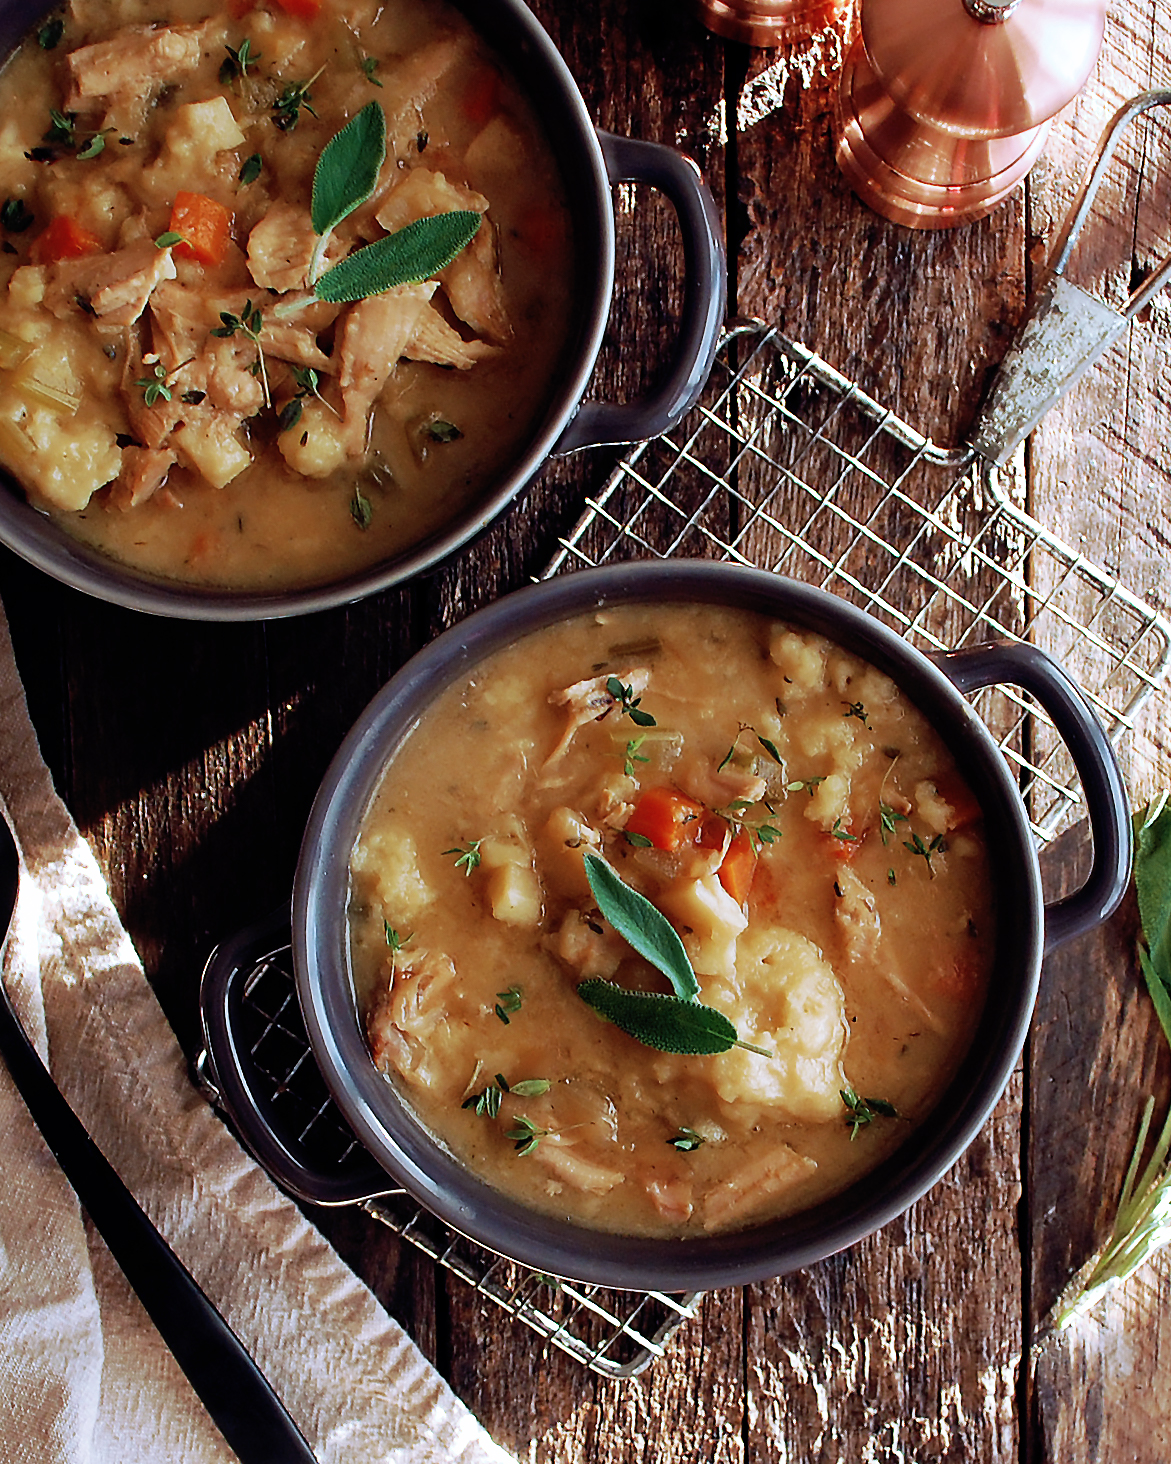 Leftover Turkey & Dumpling Soup - The Original Dish